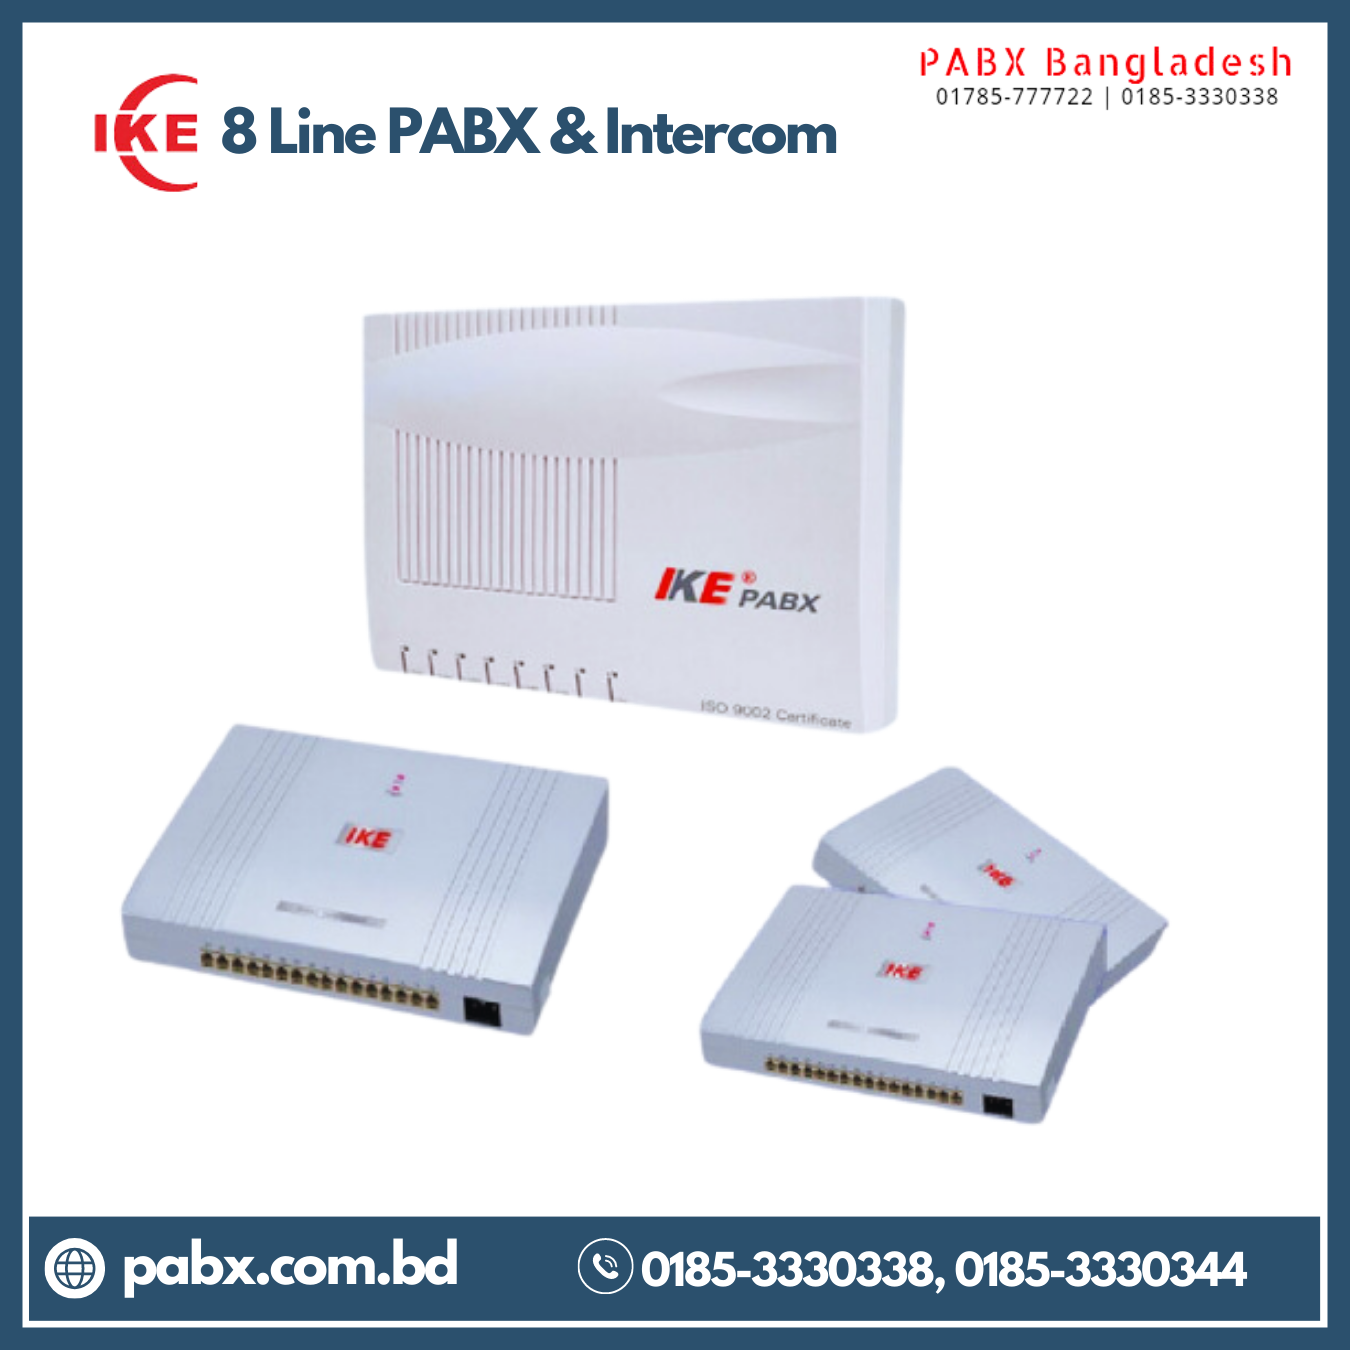 IKE 8-Line Apartment PABX & Intercom System in Bangladesh